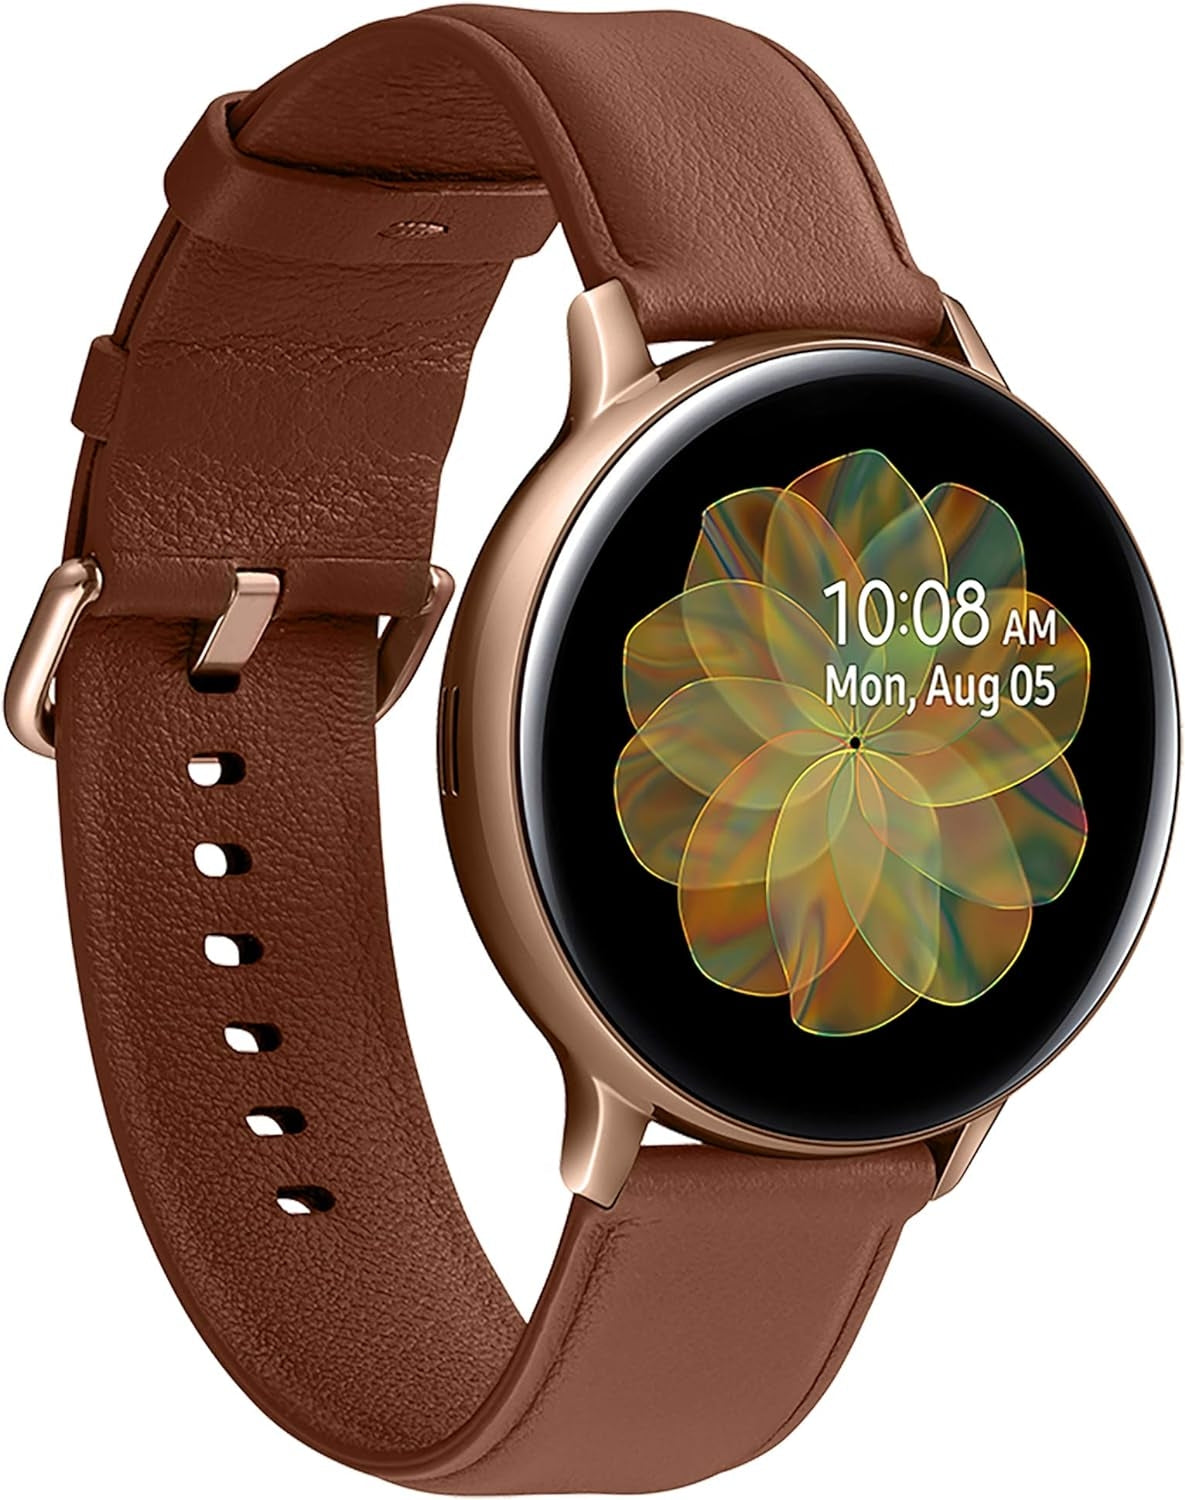 Samsung Galaxy Watch Active2 4G LTE Stainless Steel 40 mm - Rose Gold (UK Version)